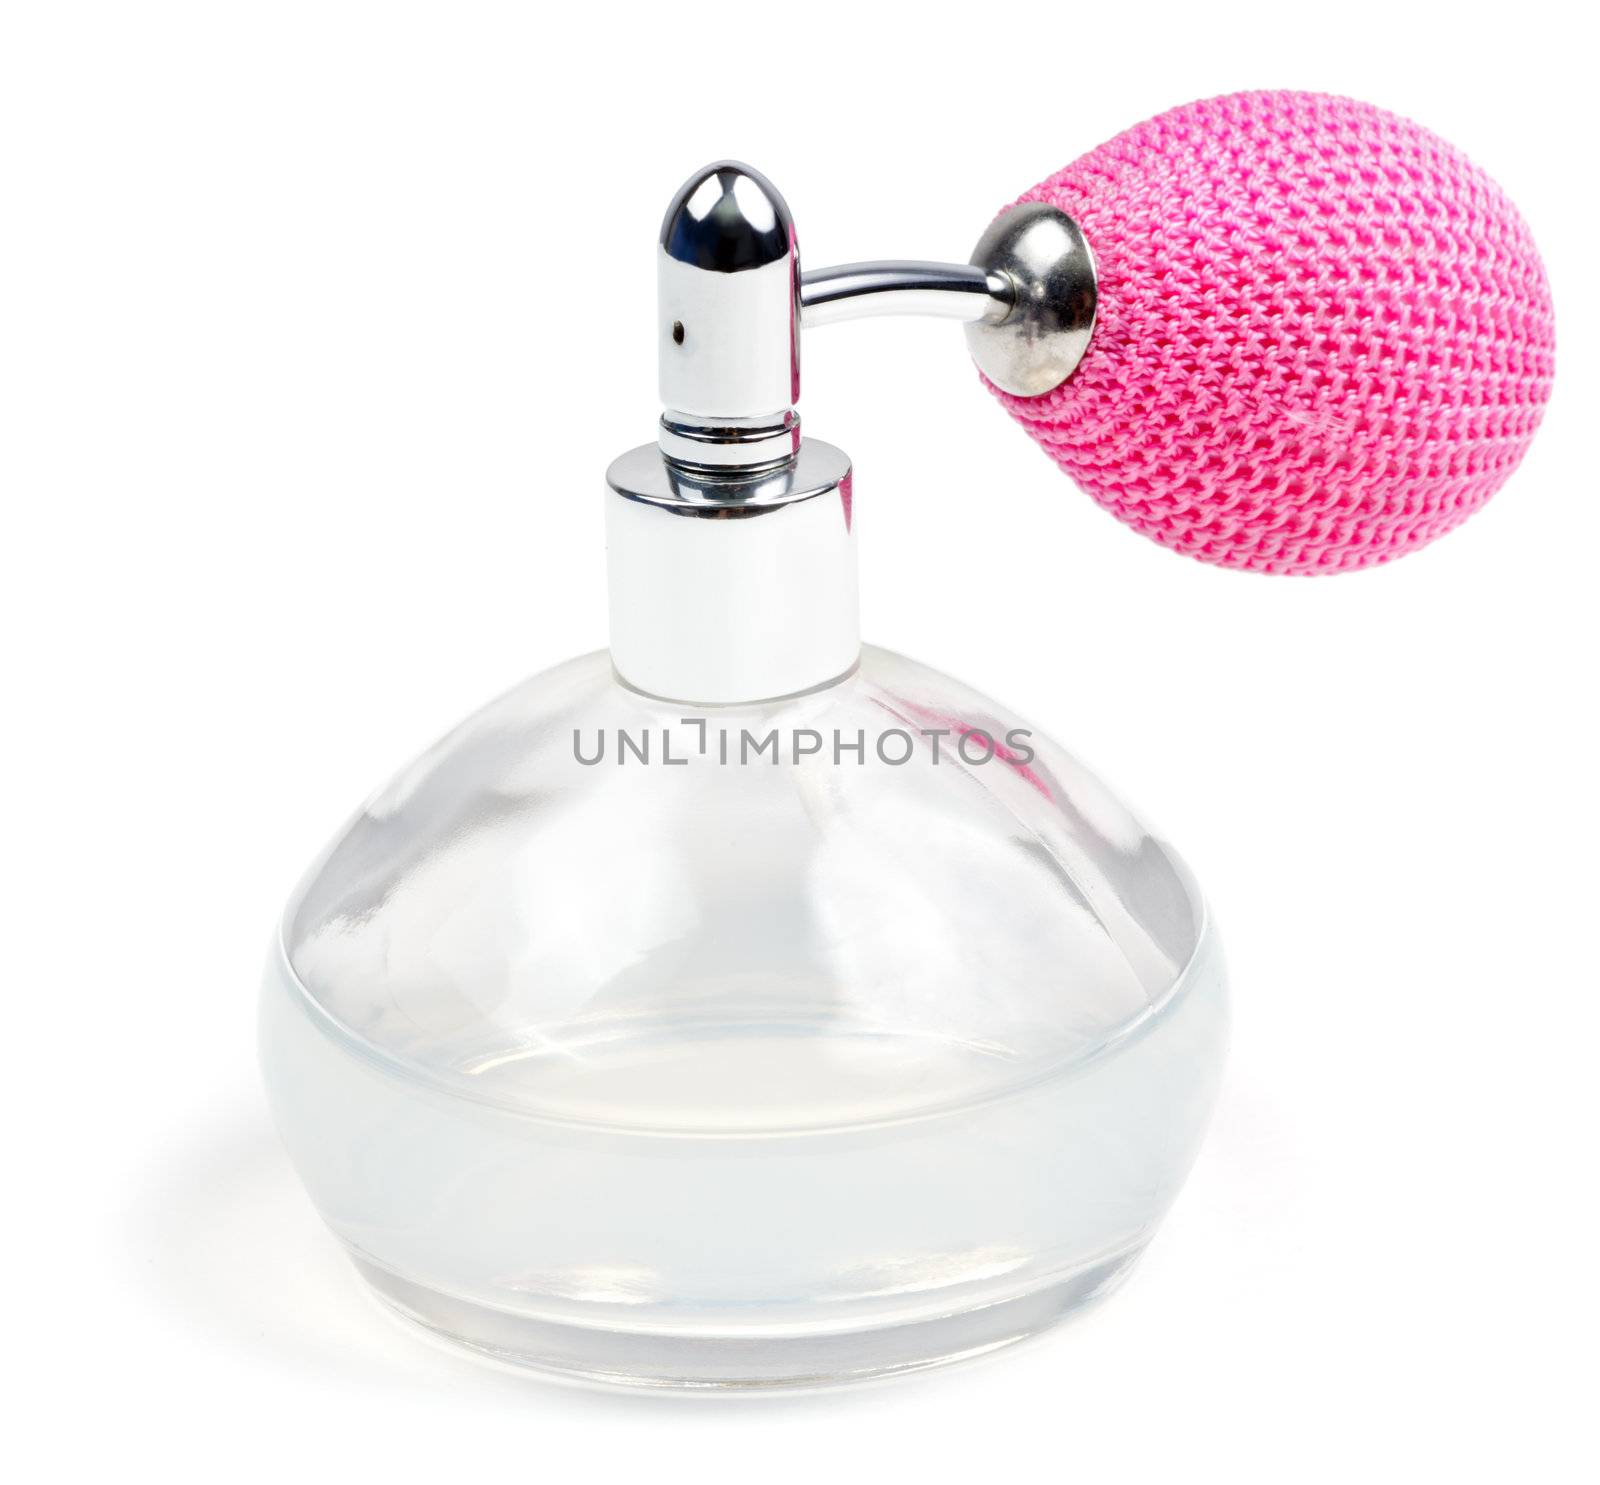 Perfume atomizer by naumoid